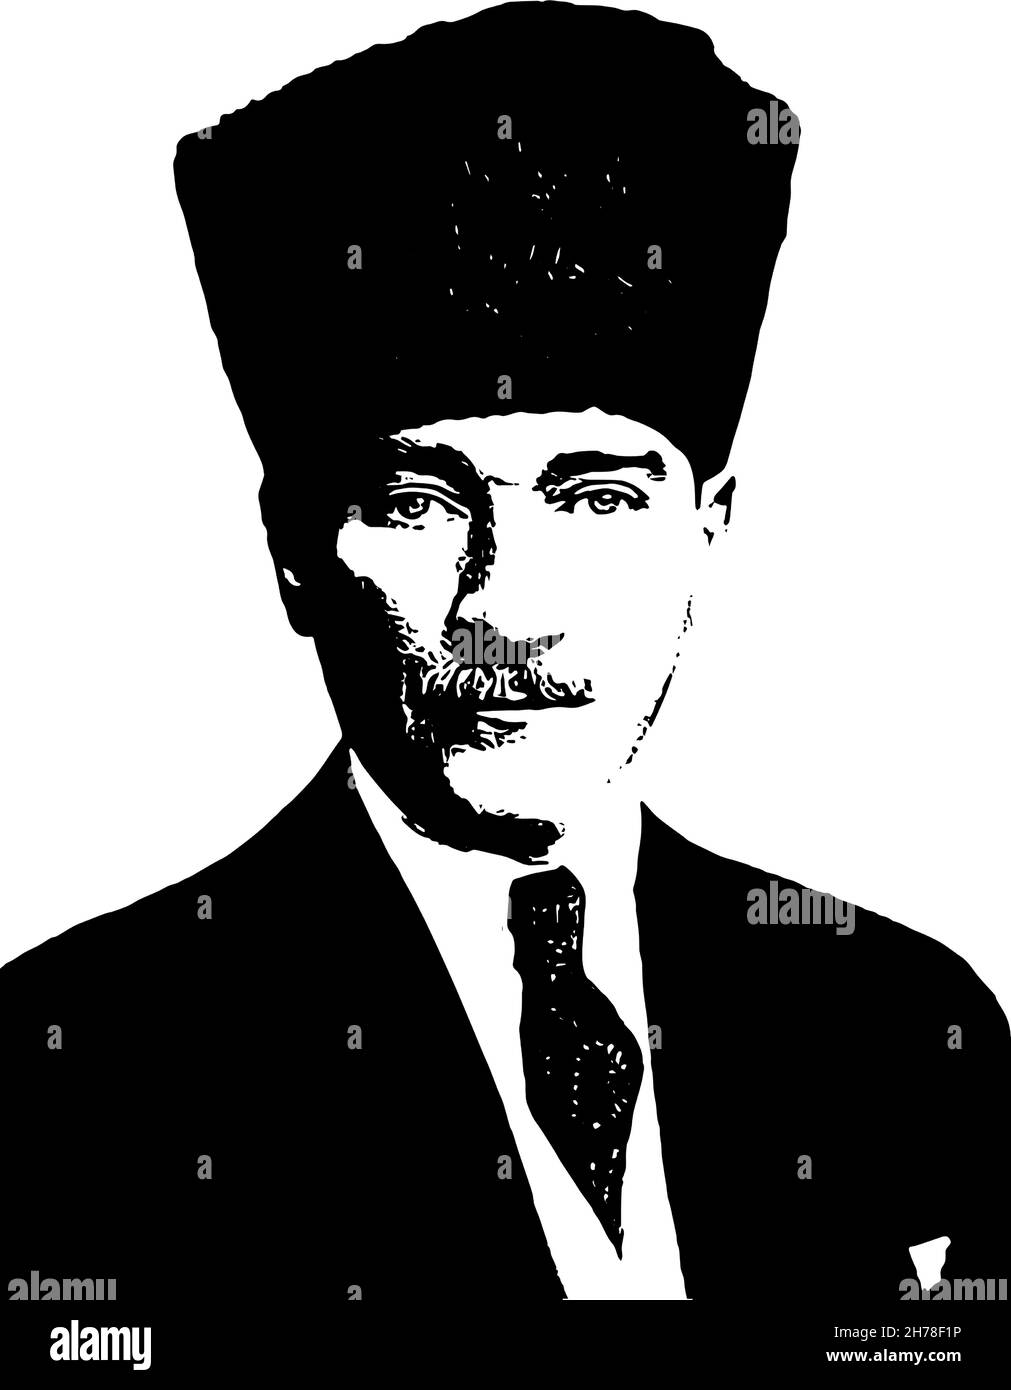 Mustafa Kemal Ataturk illustration. He is the founder of modern Republic of Turkey. Stock Vector